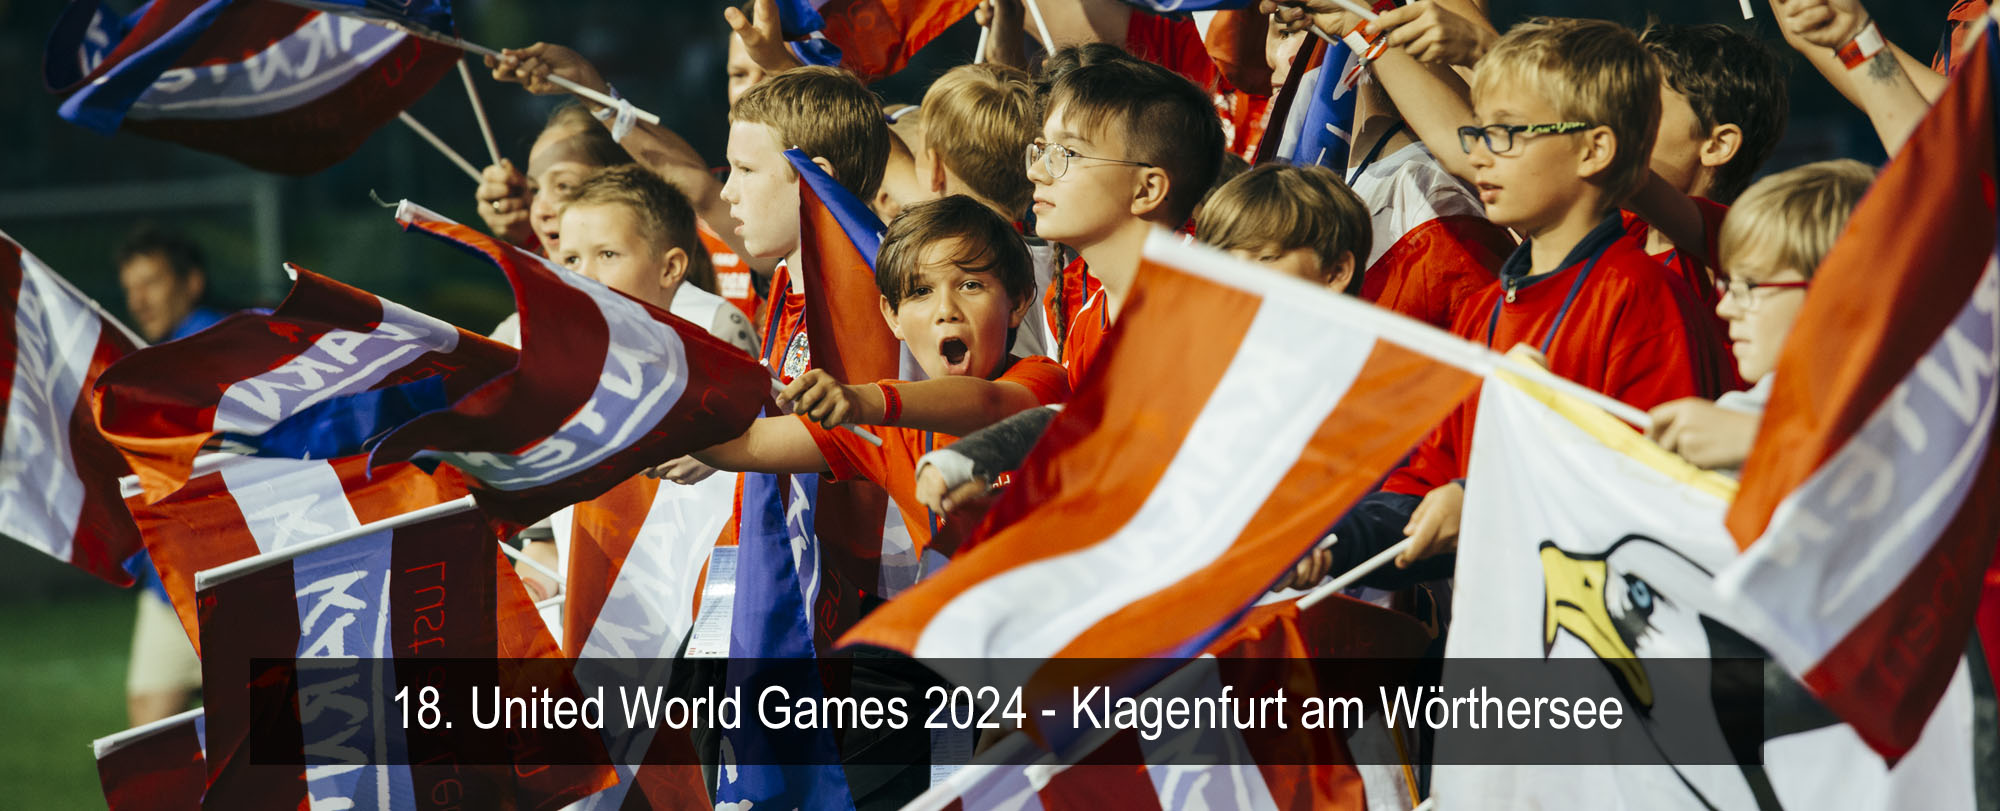 United World Games 2024